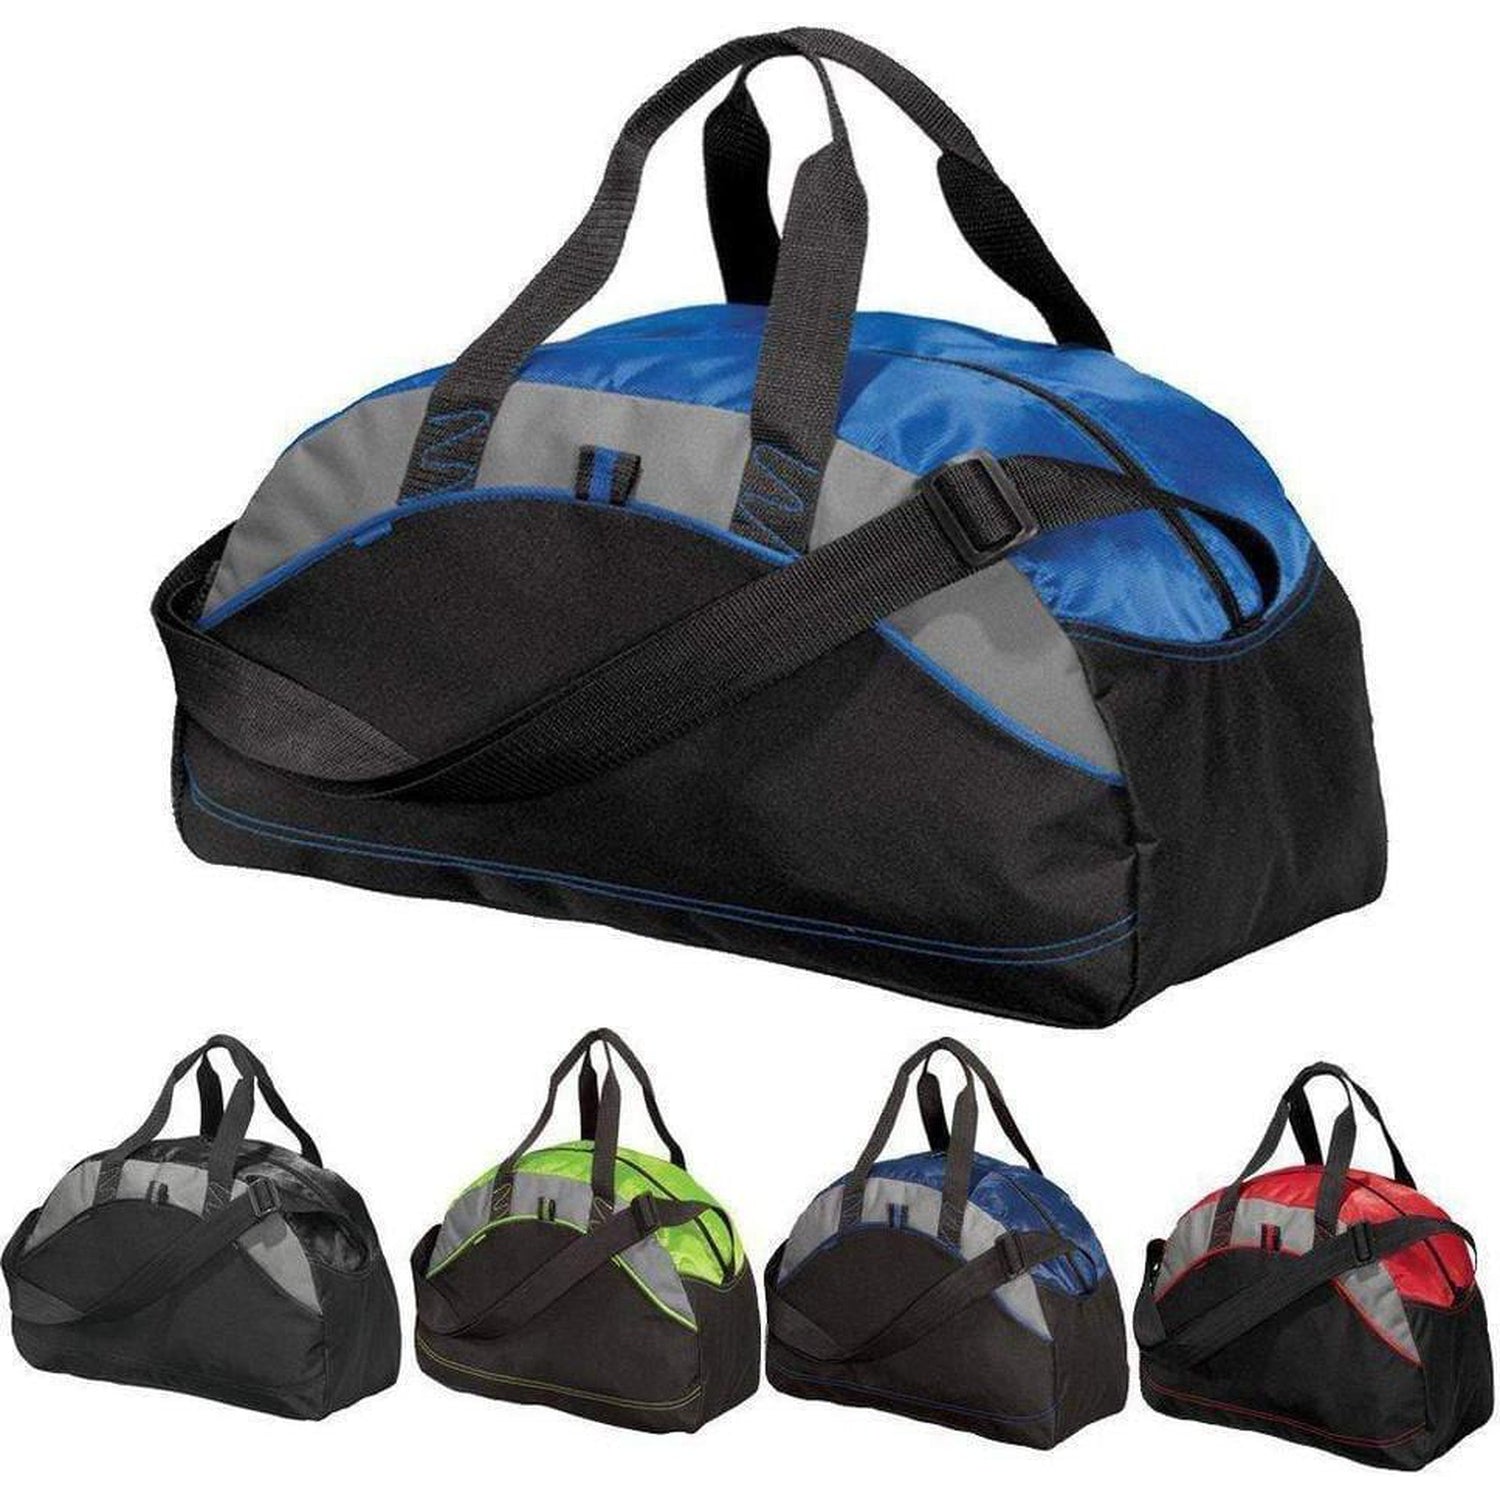 Wholesale Duffle Bags & Duffle Bags in Bulk, Travel Duffle Bags – BagzDepot™